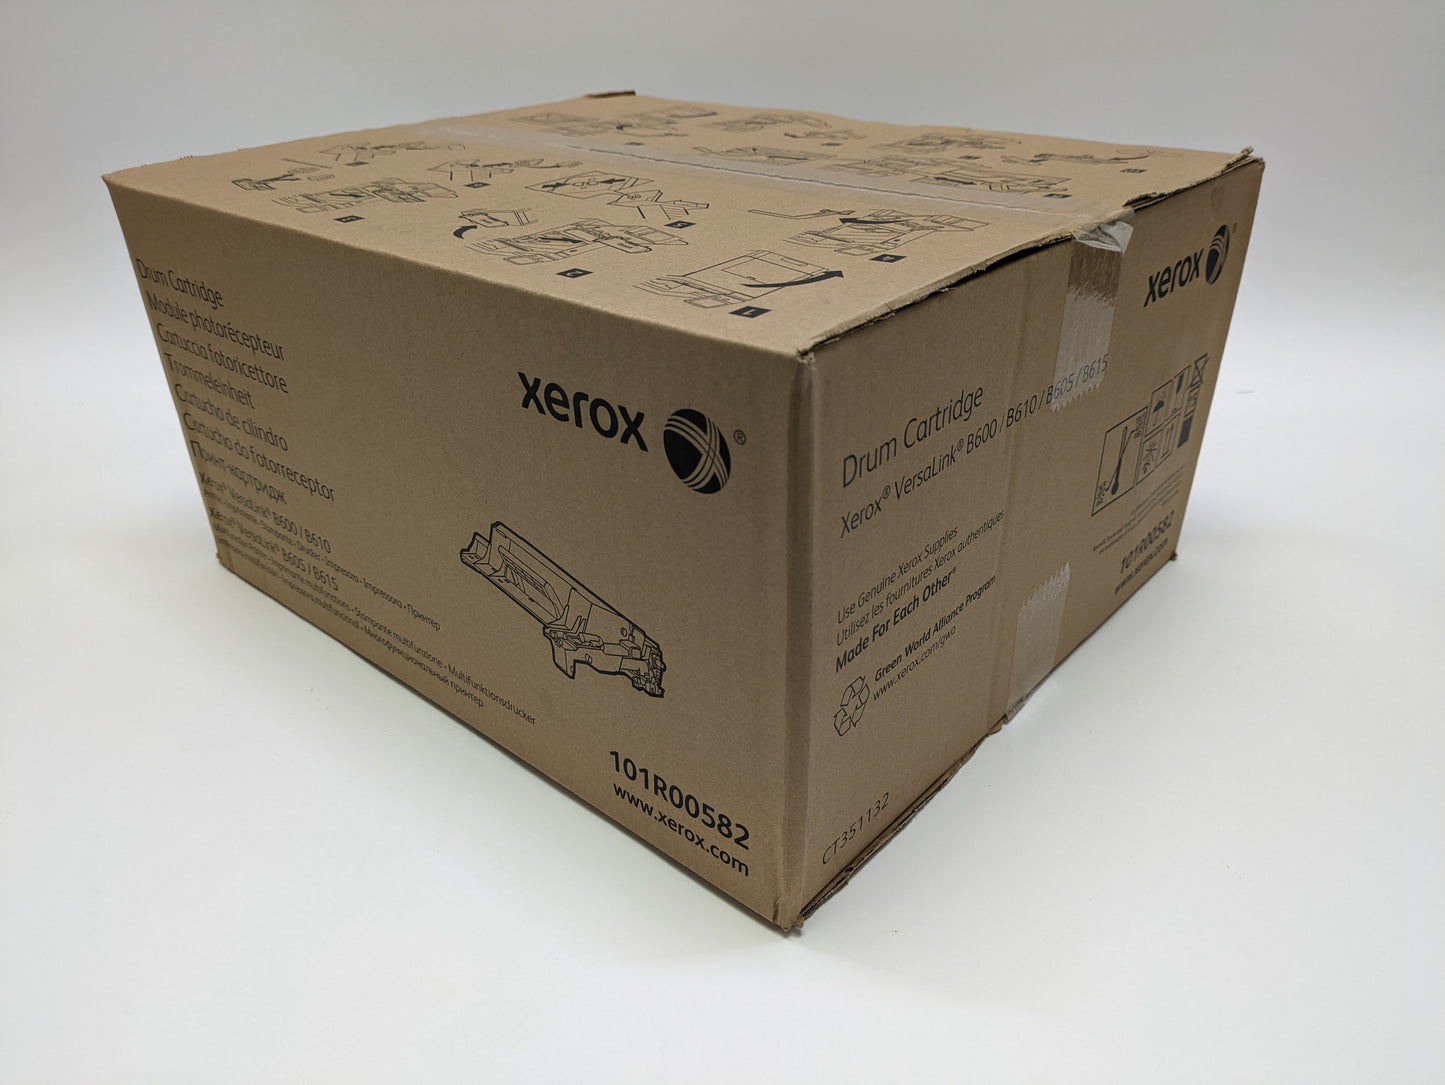 Xerox VersaLink Drum Cartridge - 101R00582 New